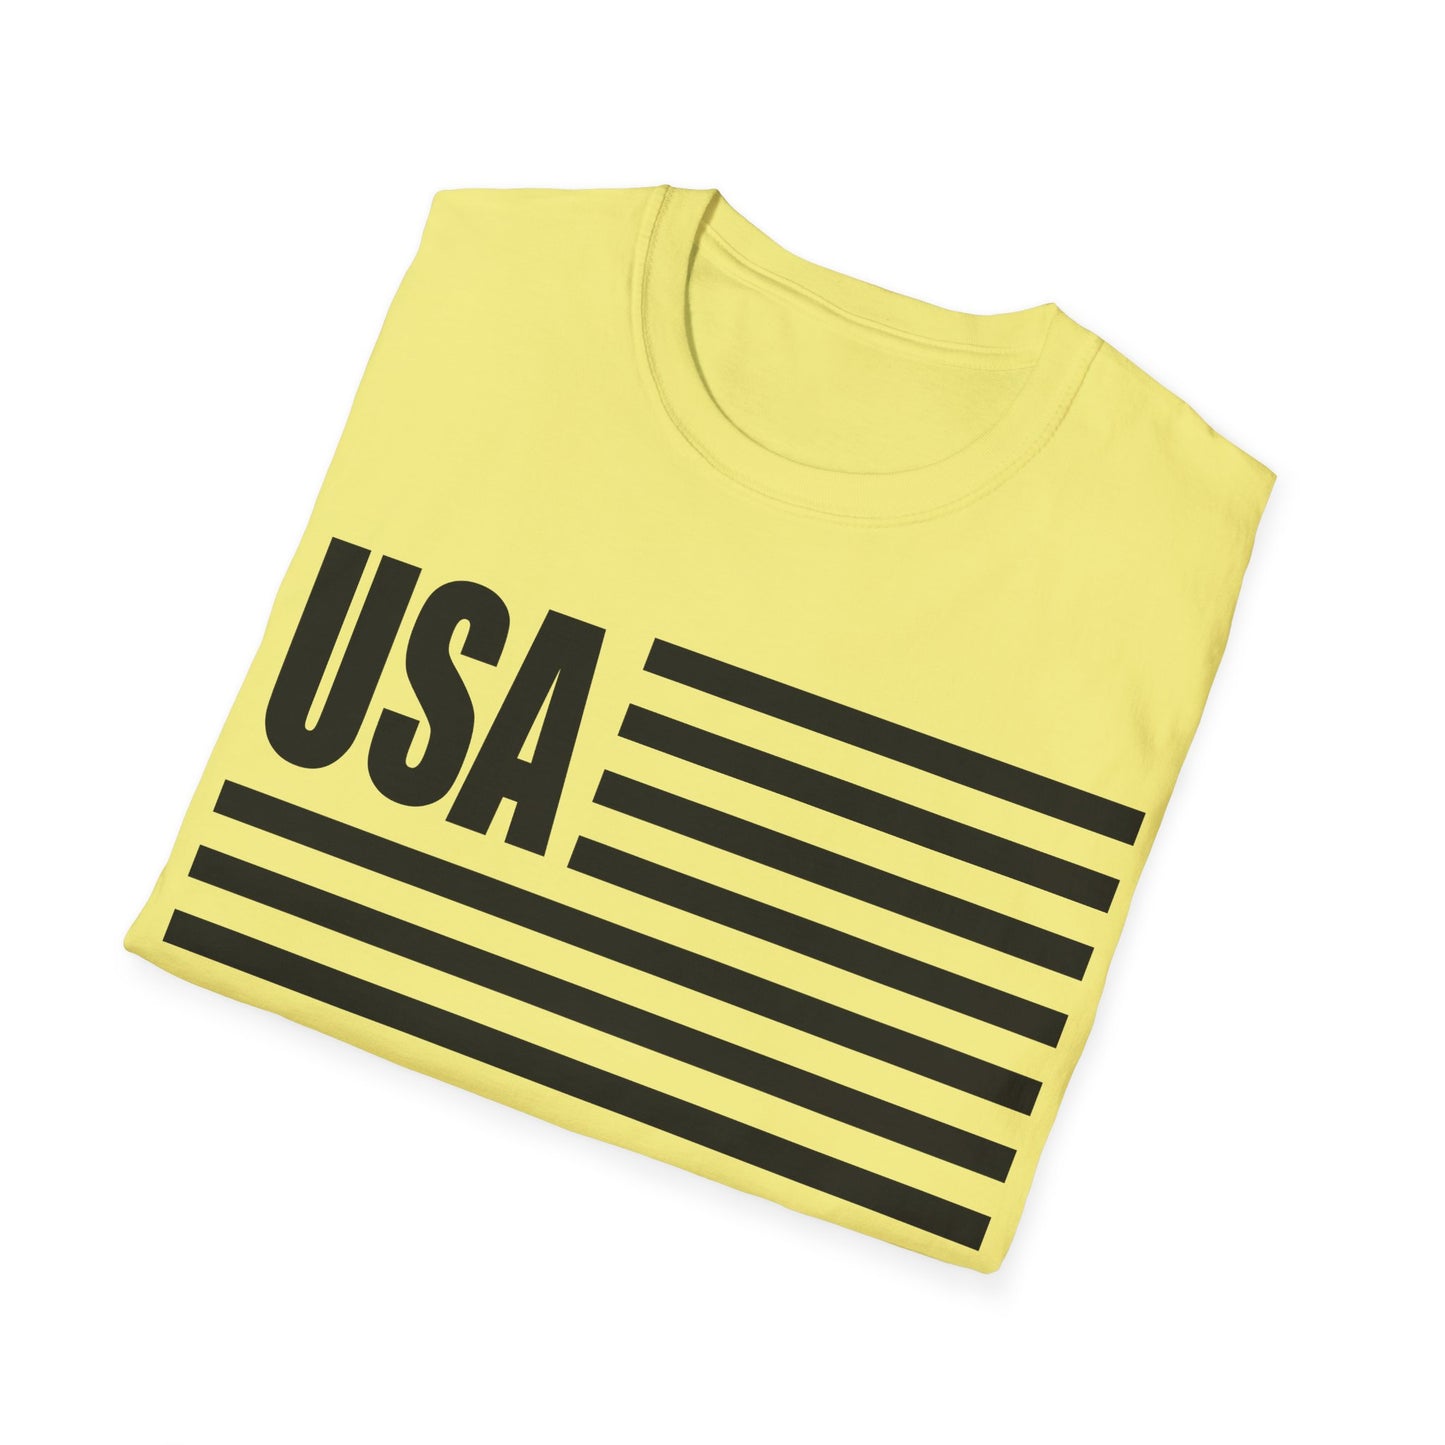 American Flag USA B&W - Unisex Softstyle T-Shirt